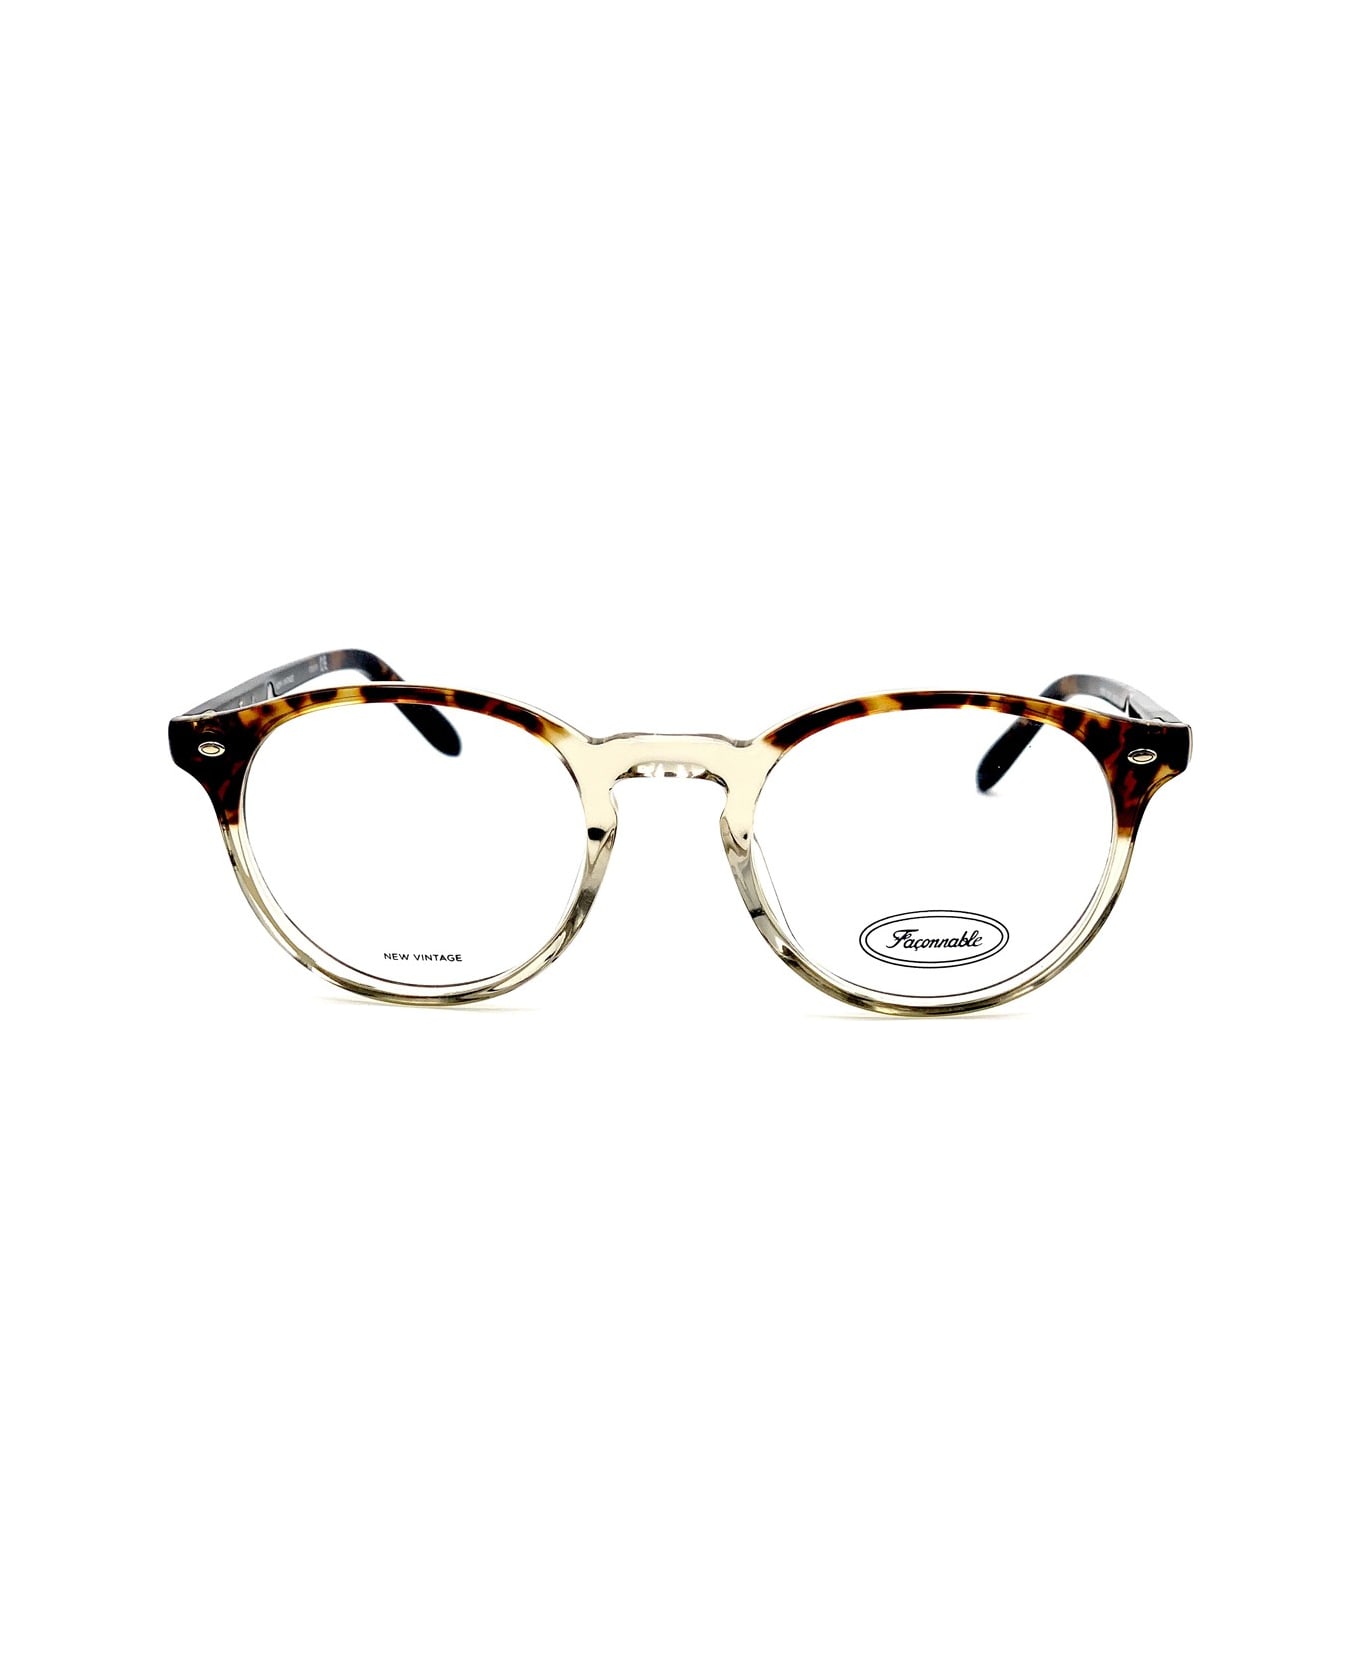 Faconnable Nv250 Ecnc Glasses - Beige